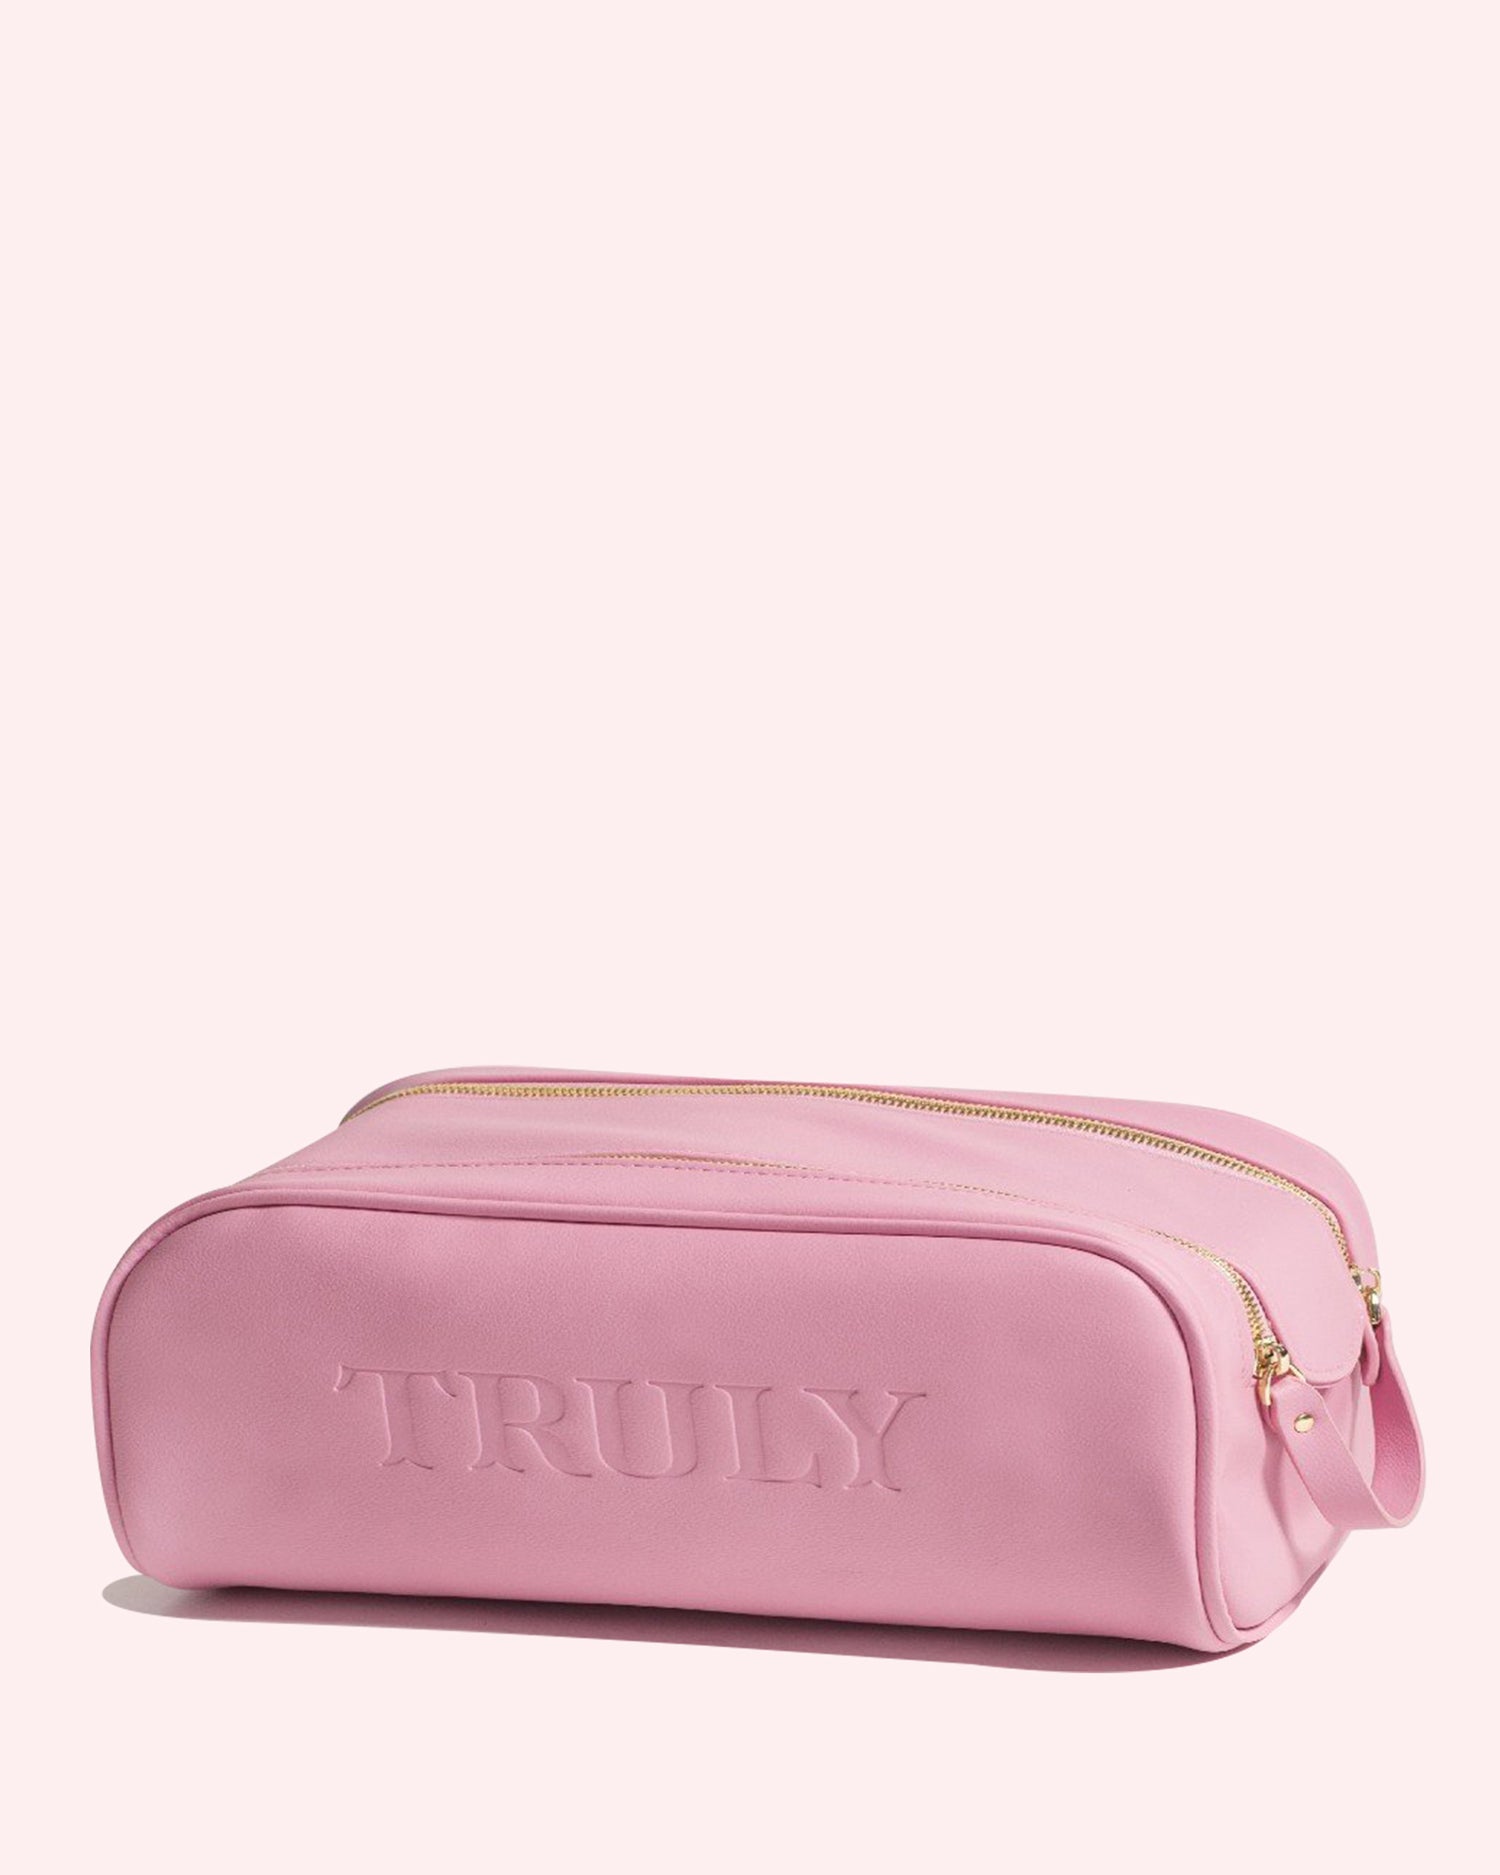 Victoria's Secret Travel Bag Cosmetic Bags